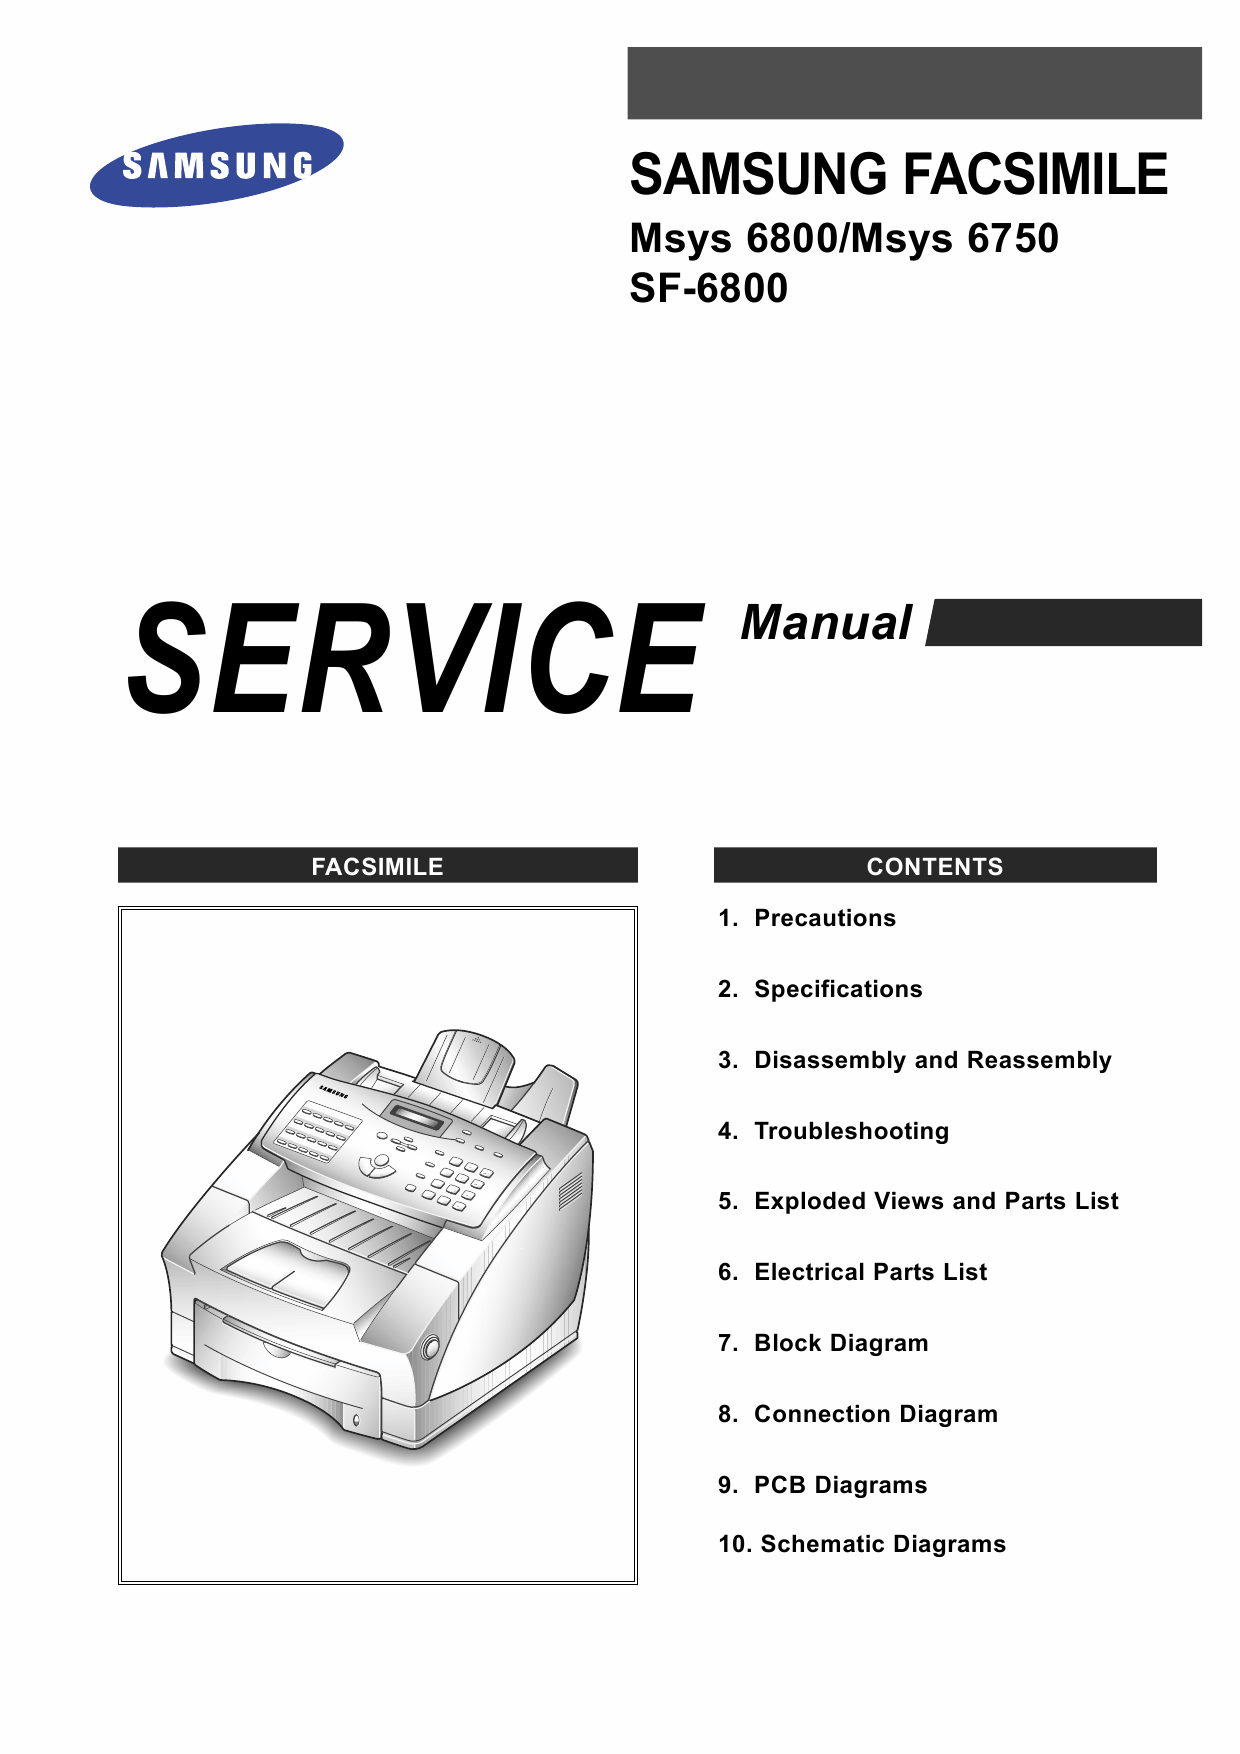 Samsung FACXIMILE SF-6800 Msys-6800 6750 Parts and Service Manual-1